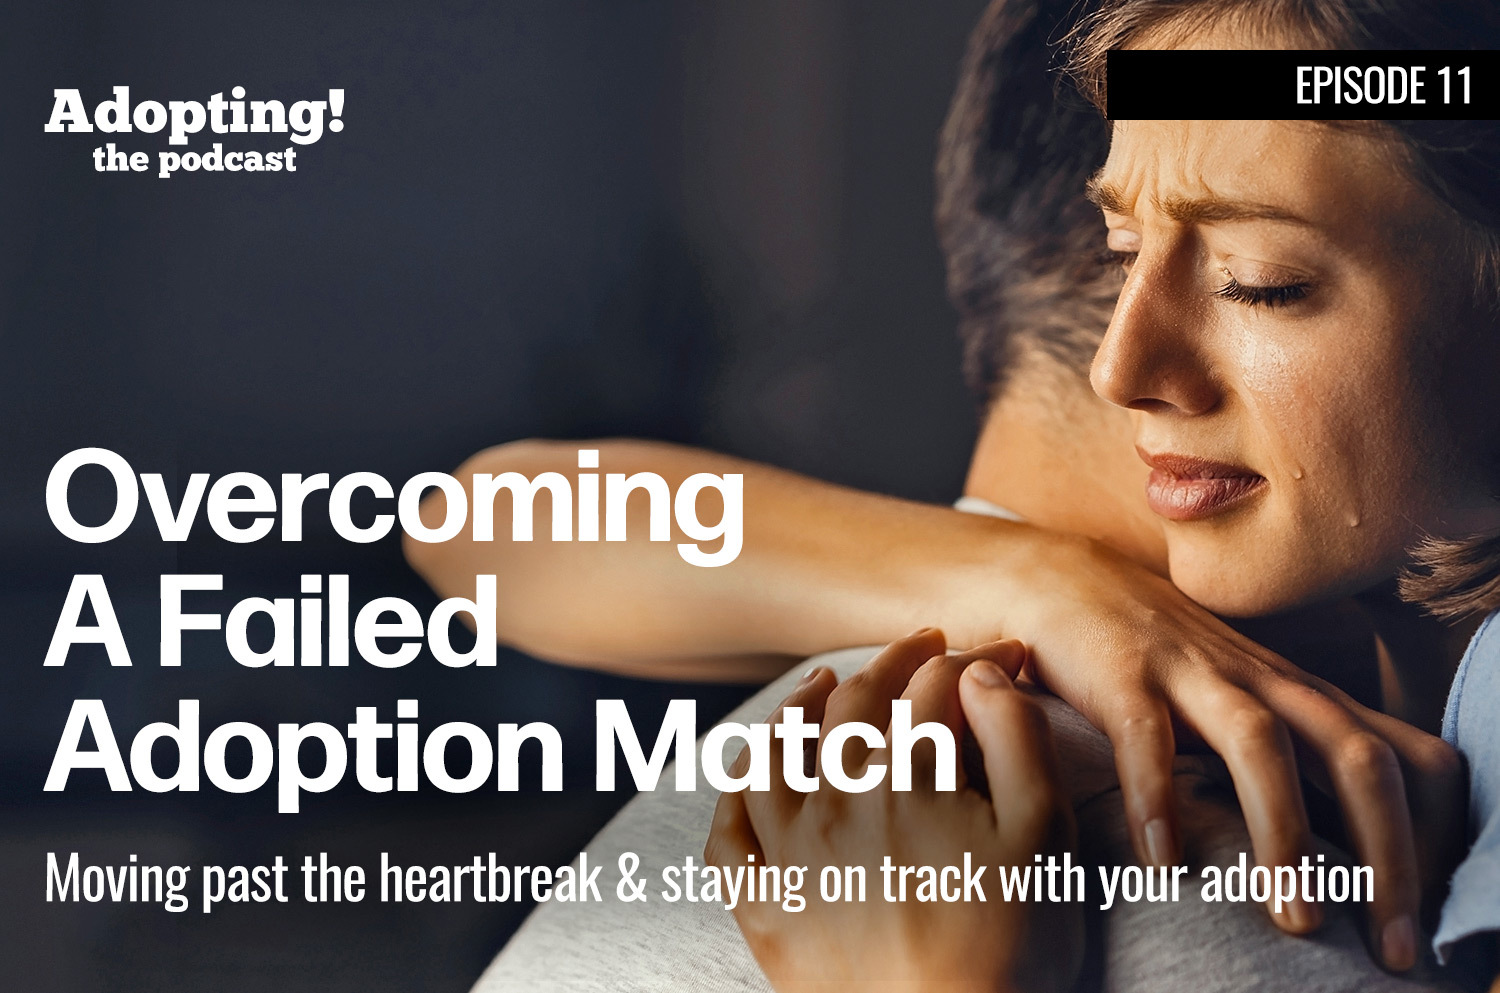 Overcoming a failed adoption match